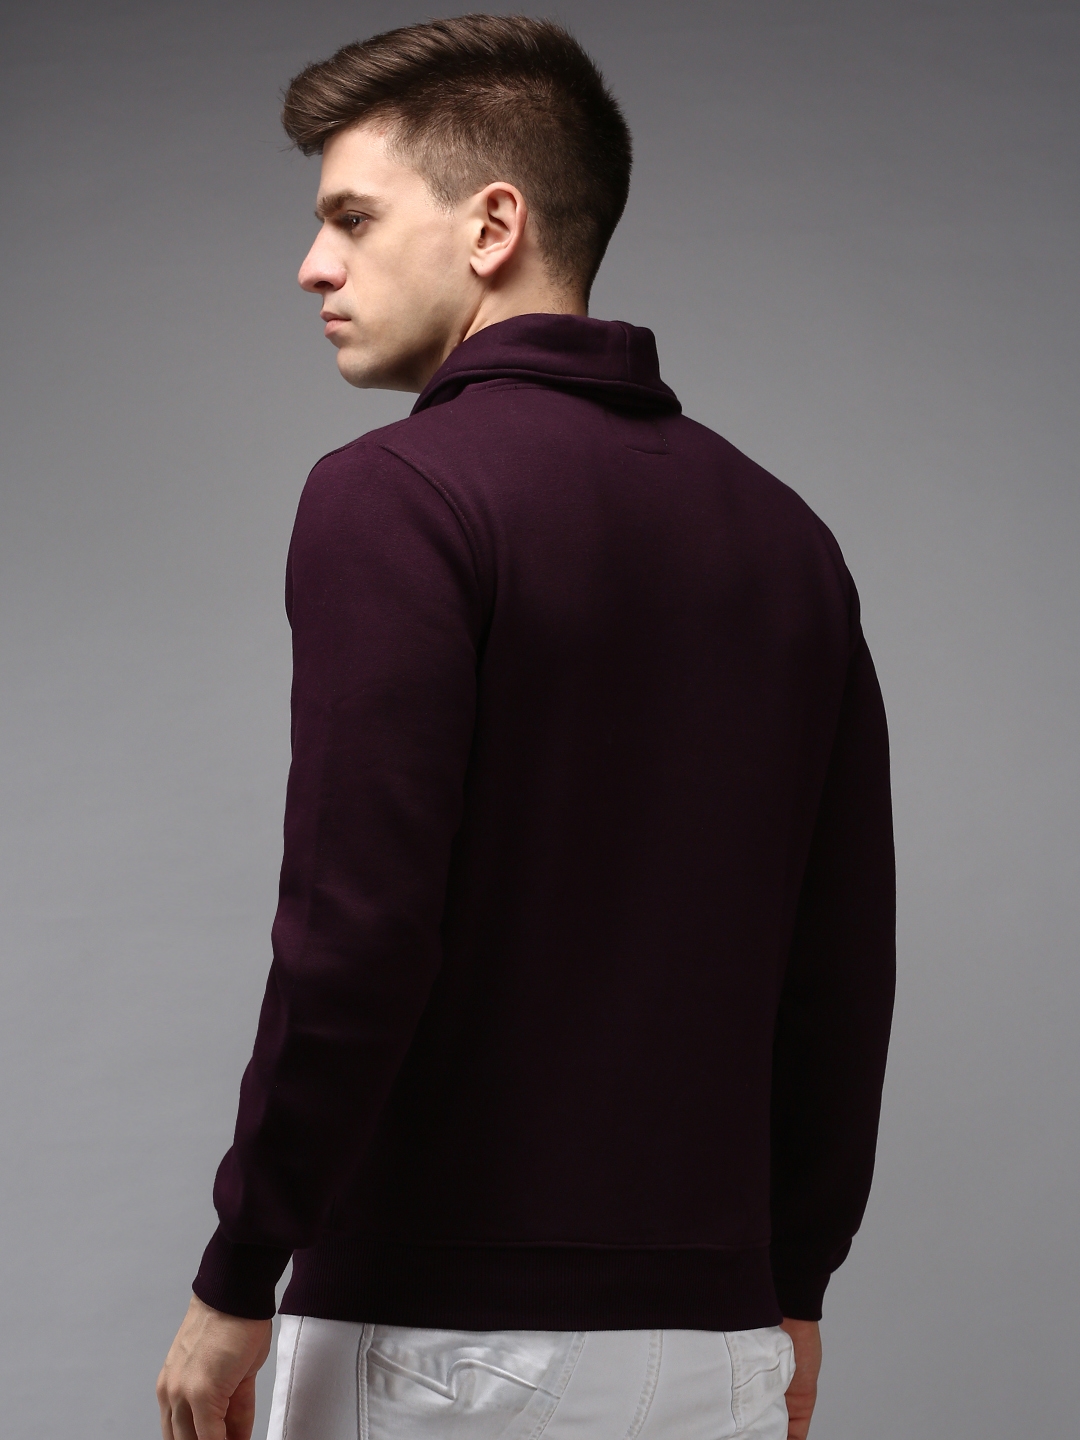 Men's Purple Cotton Solid Sweatshirts